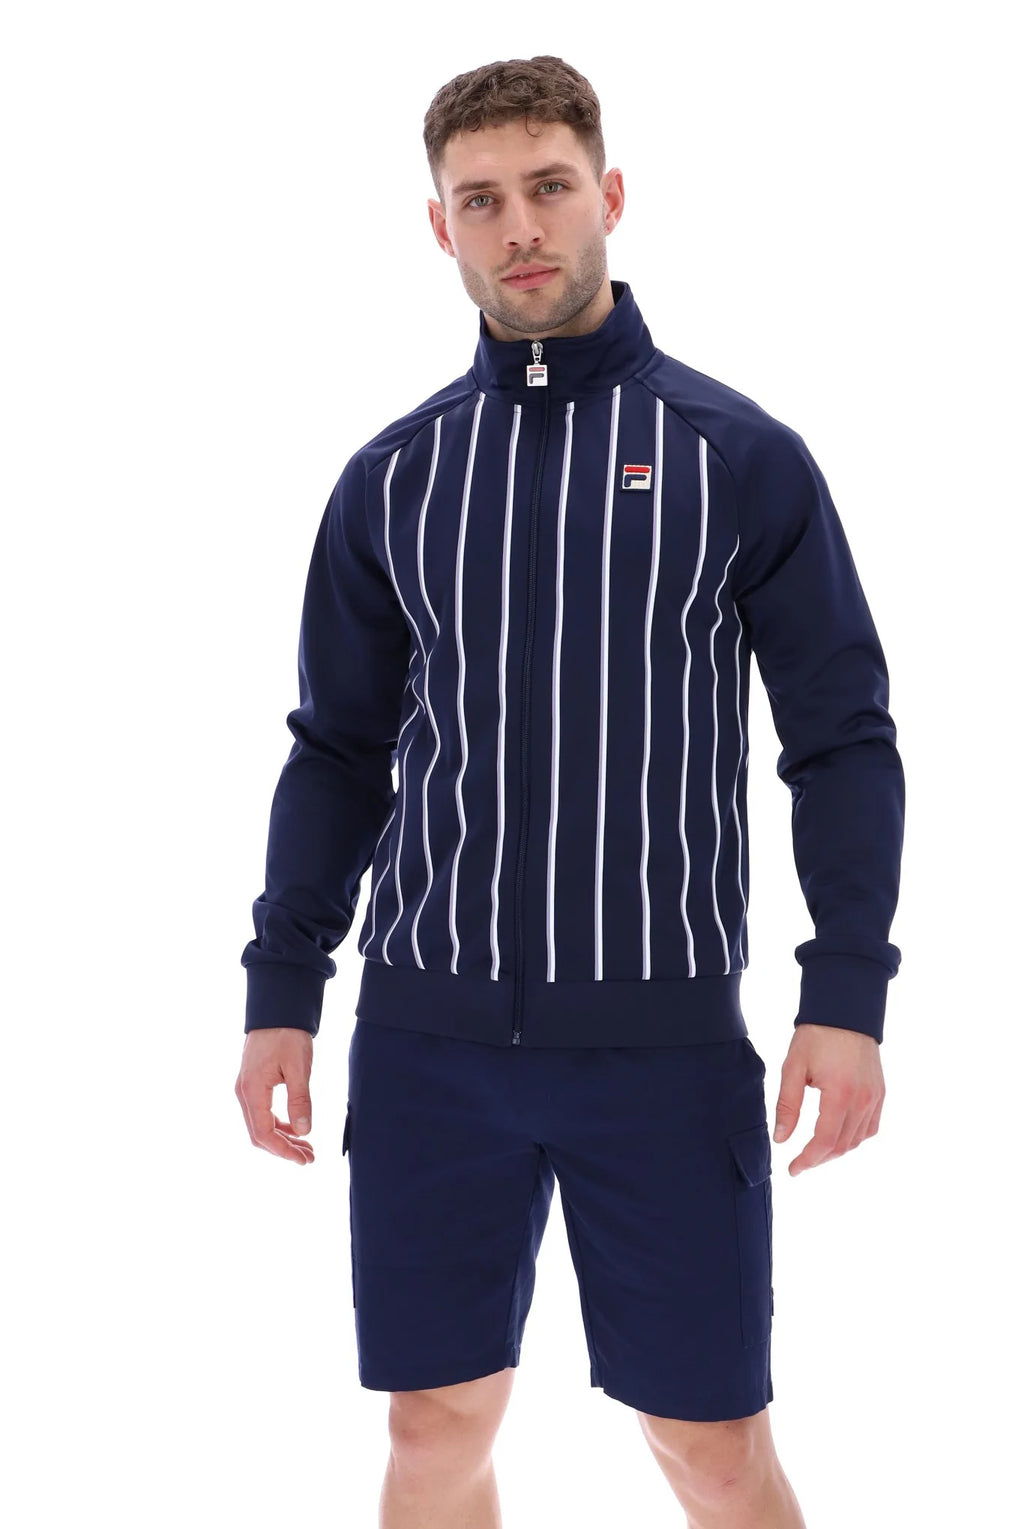 FILA Hudson Striped Track Top Jacket Navy - Raw Menswear